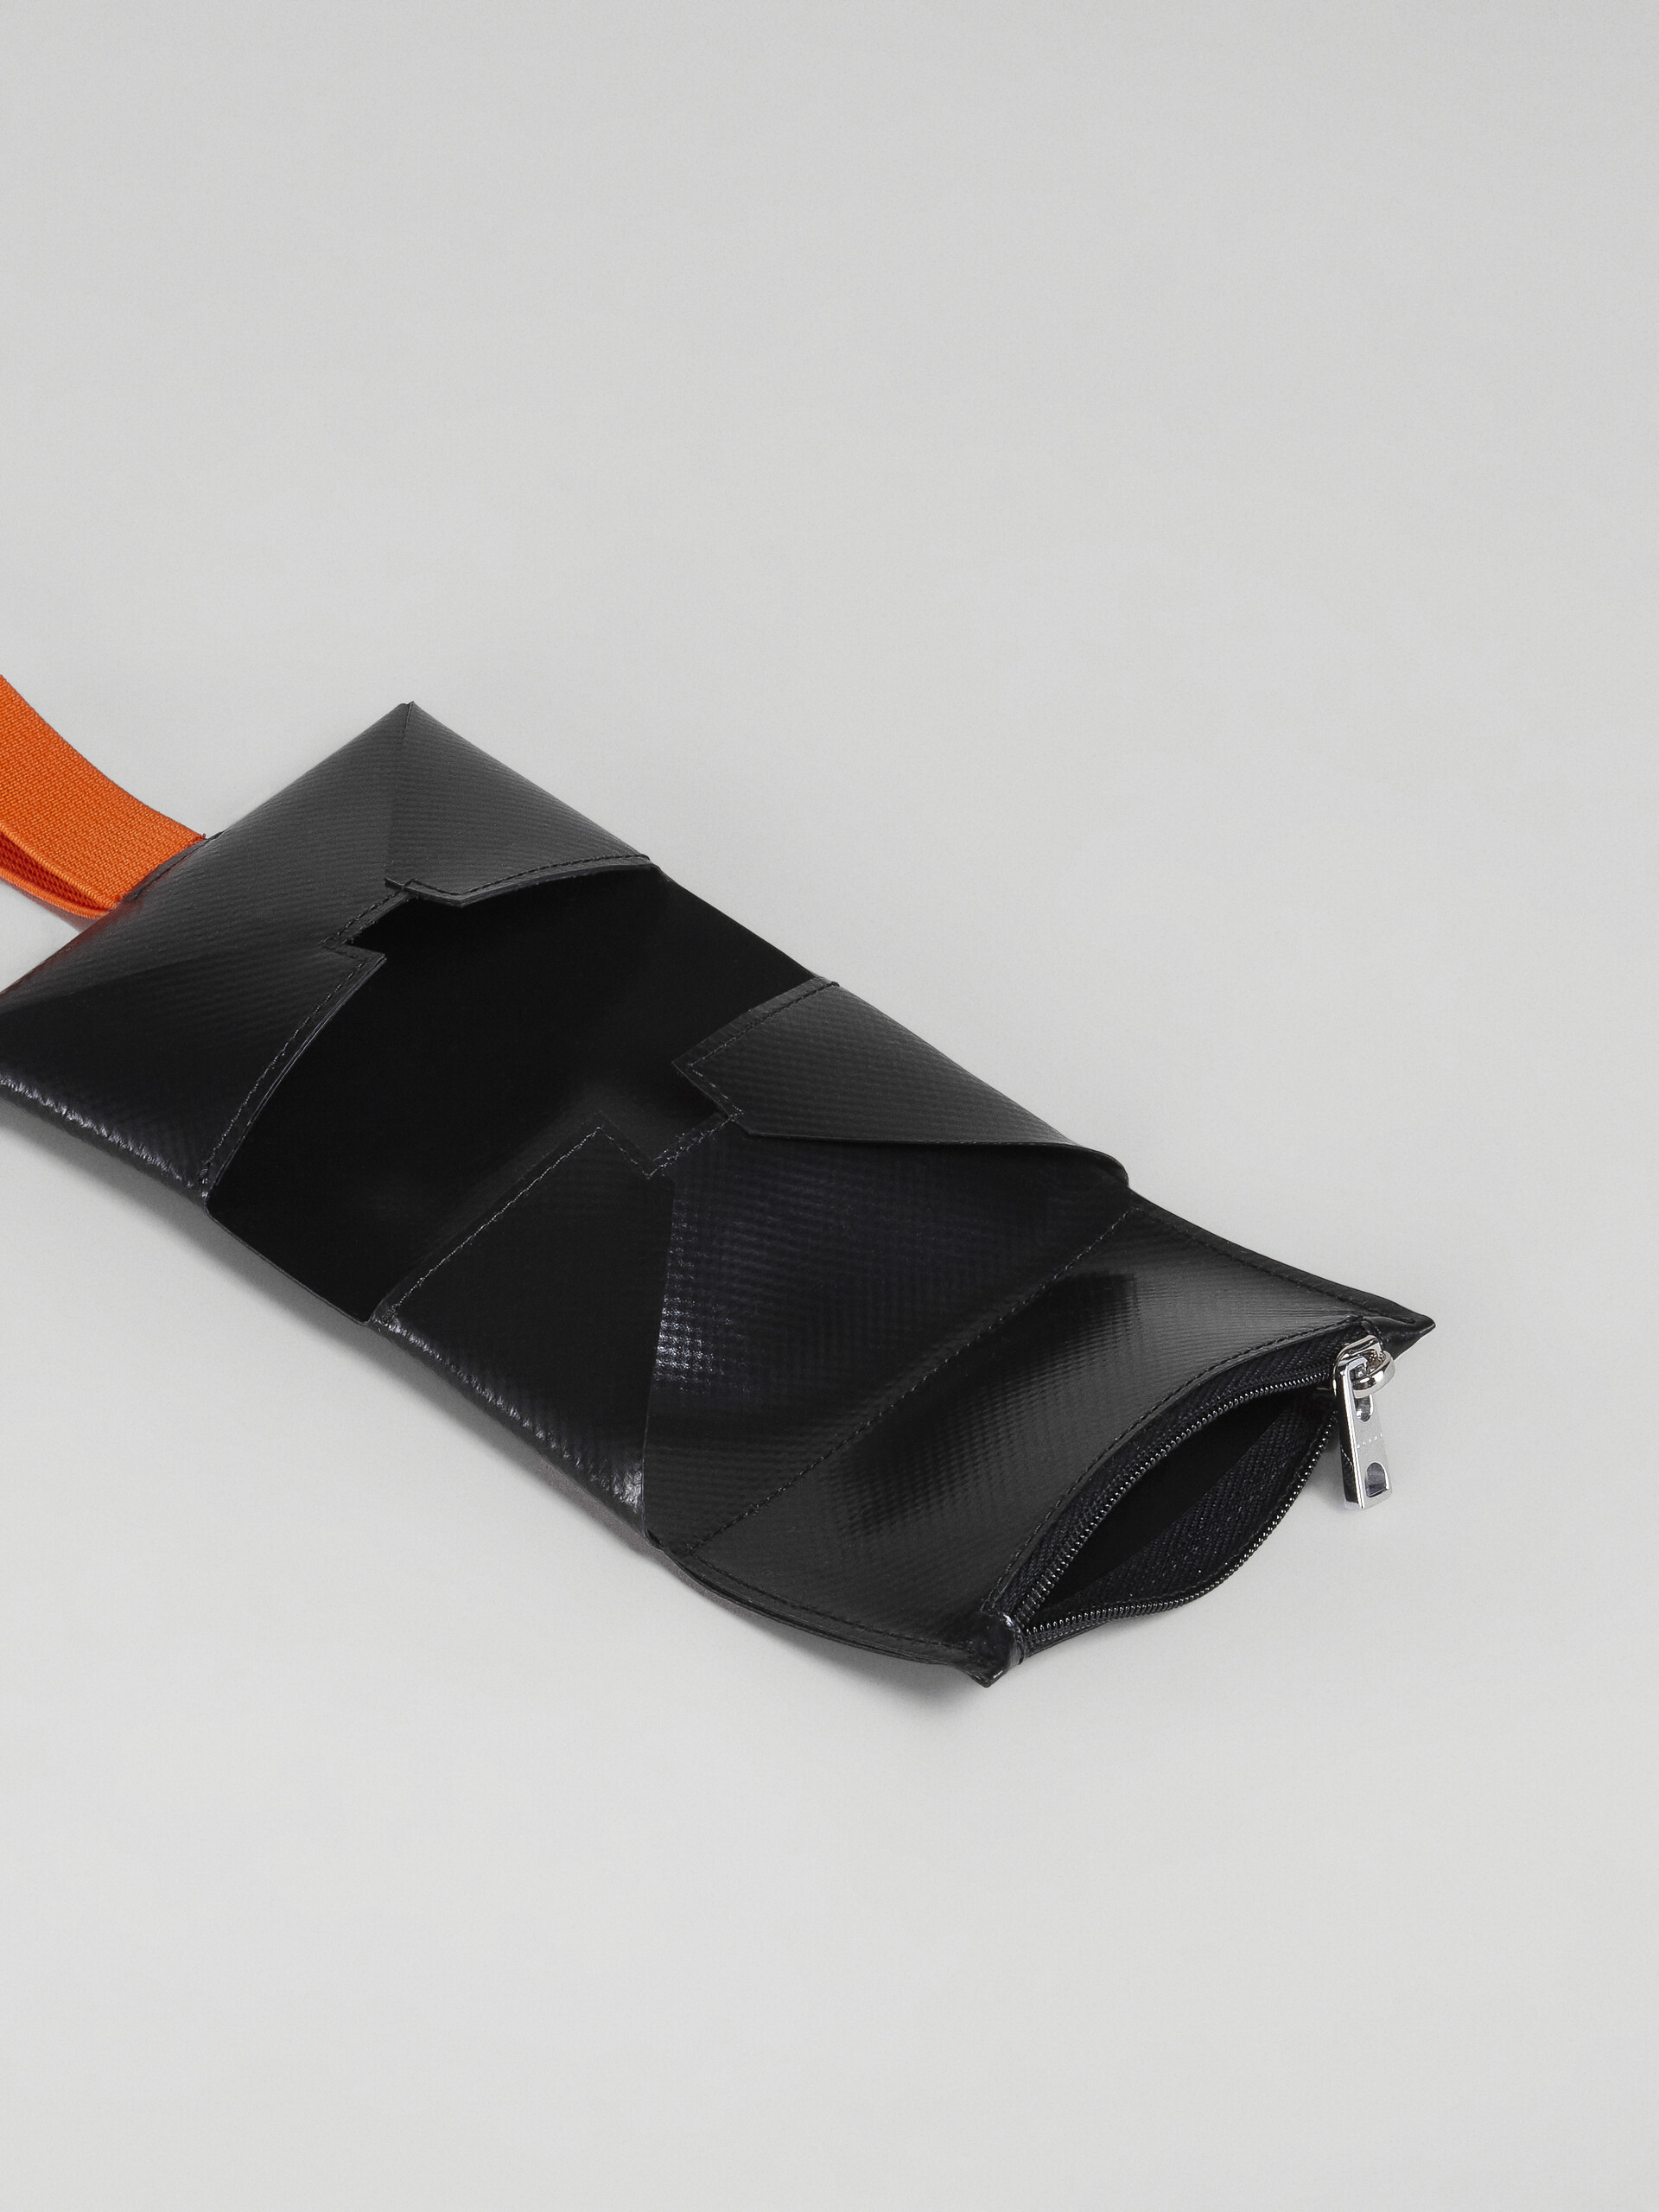 Black and orange origami wallet - Wallets - Image 2